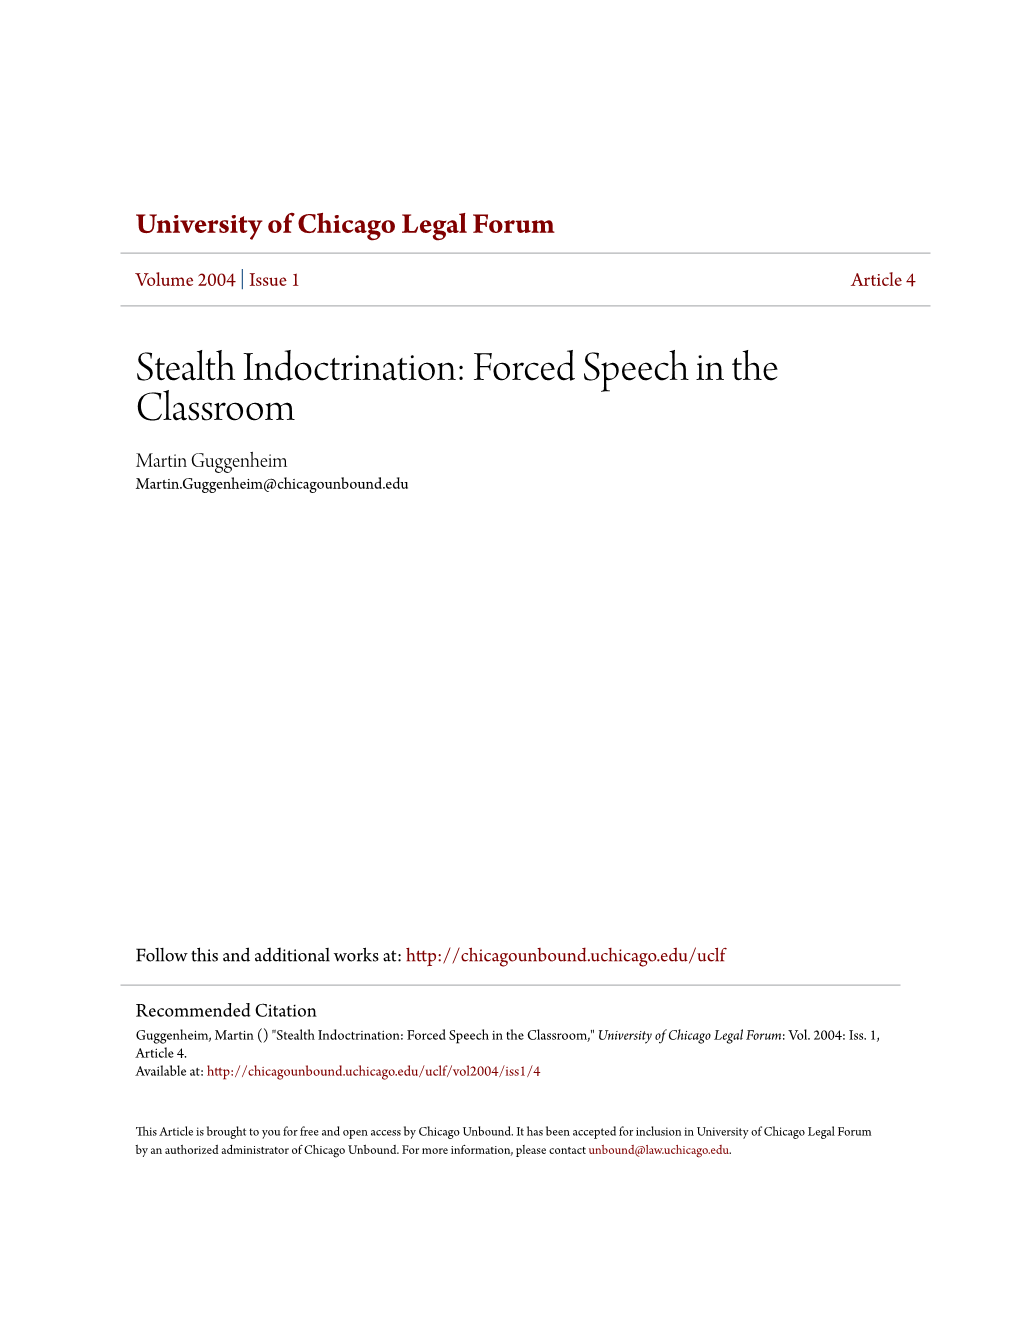 Stealth Indoctrination: Forced Speech in the Classroom Martin Guggenheim Martin.Guggenheim@Chicagounbound.Edu